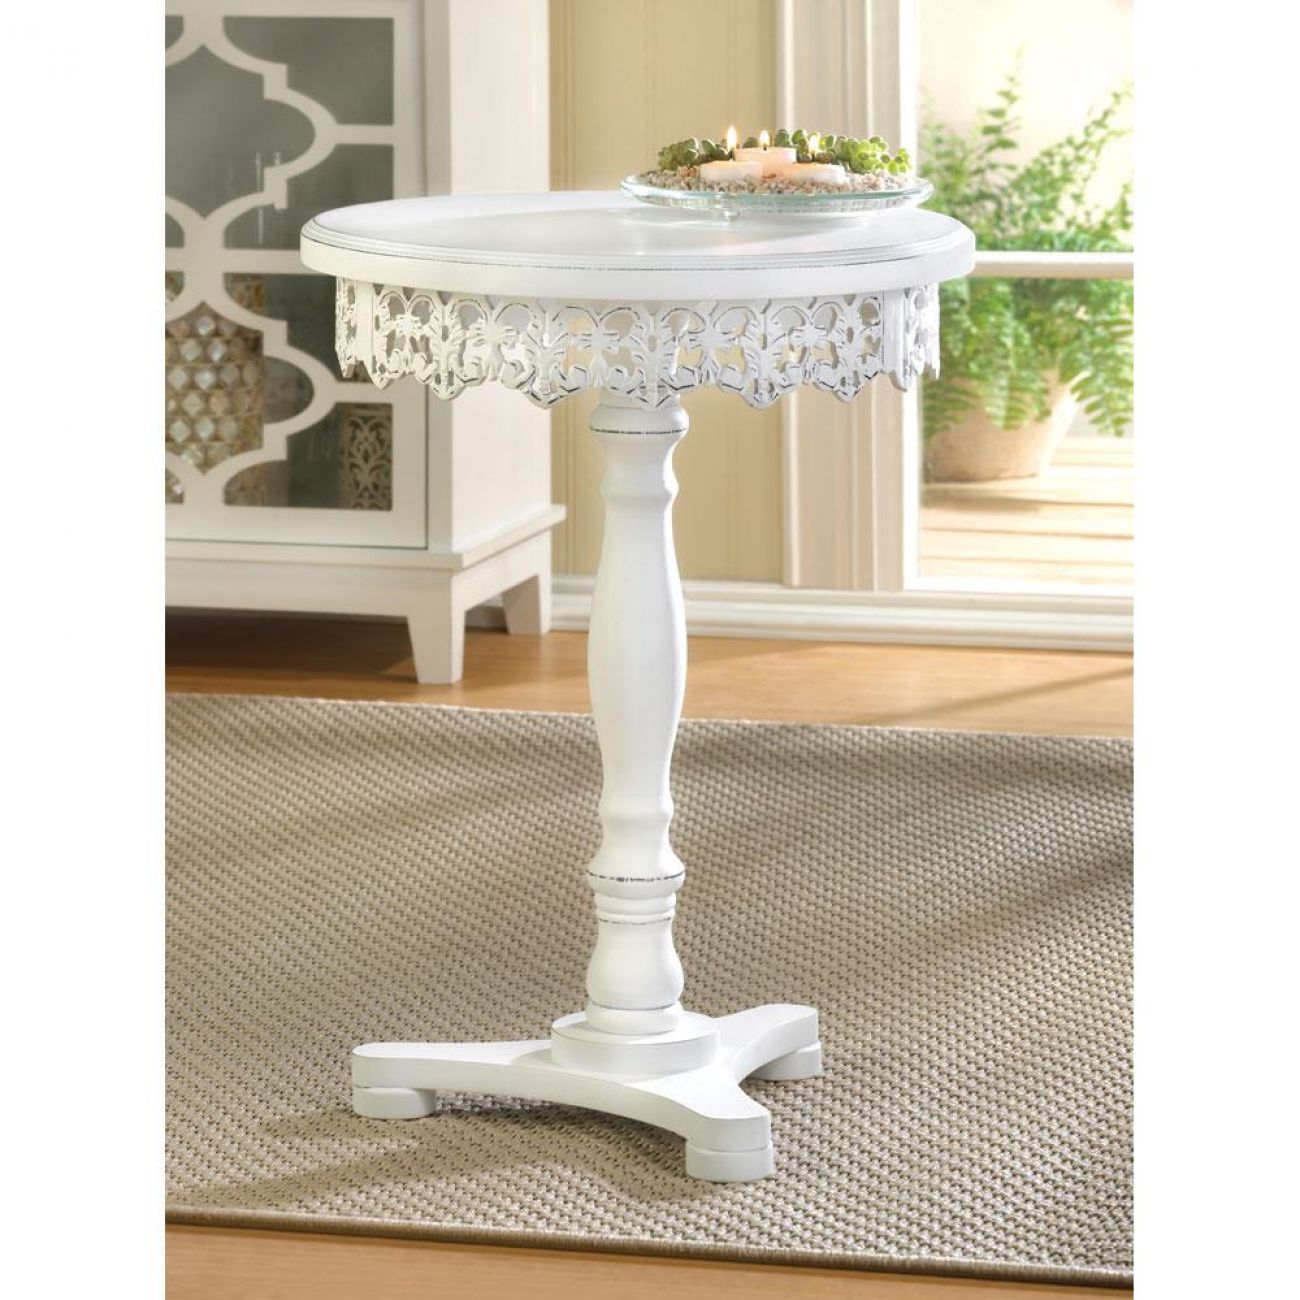 Flourish Pedestal Table